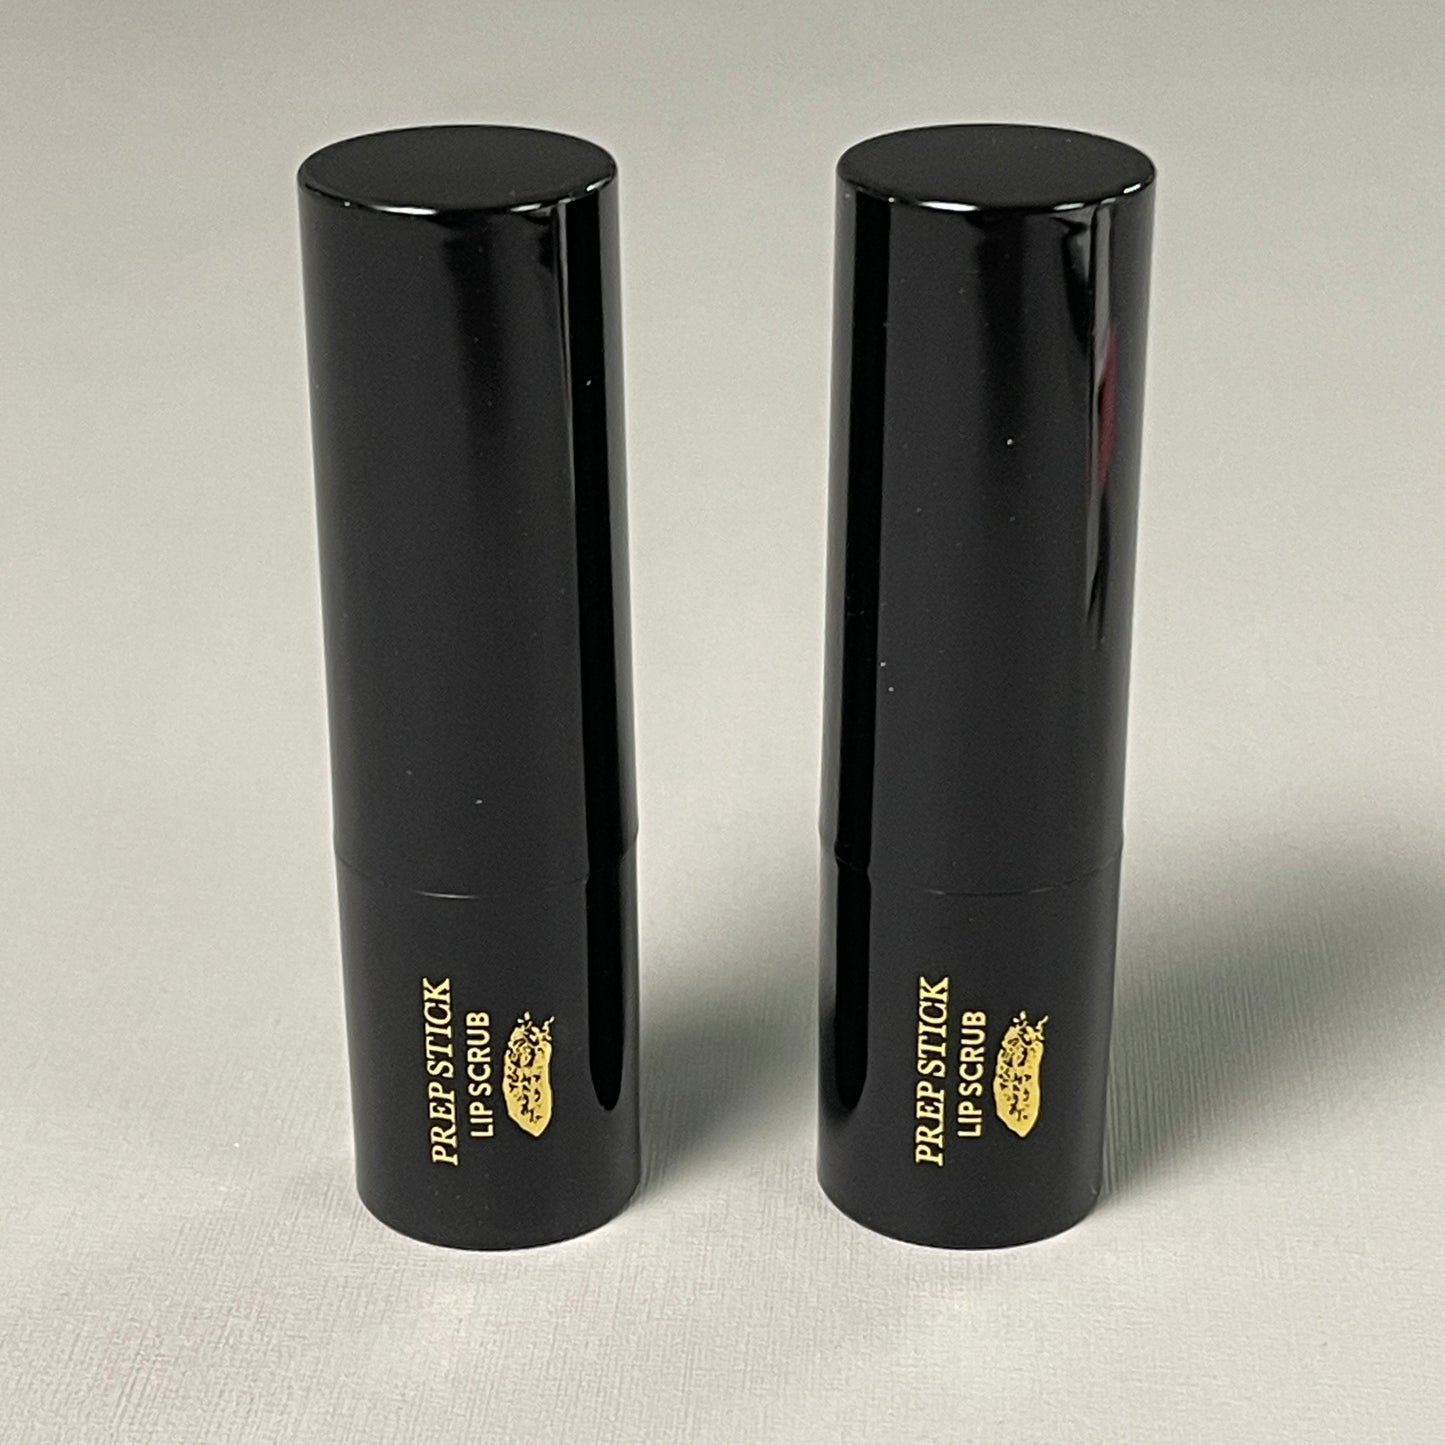 LAURA GELLER 2-Pack Prep Stick Lip Scrub .16 oz Gently Exfoliate + Condition (New)